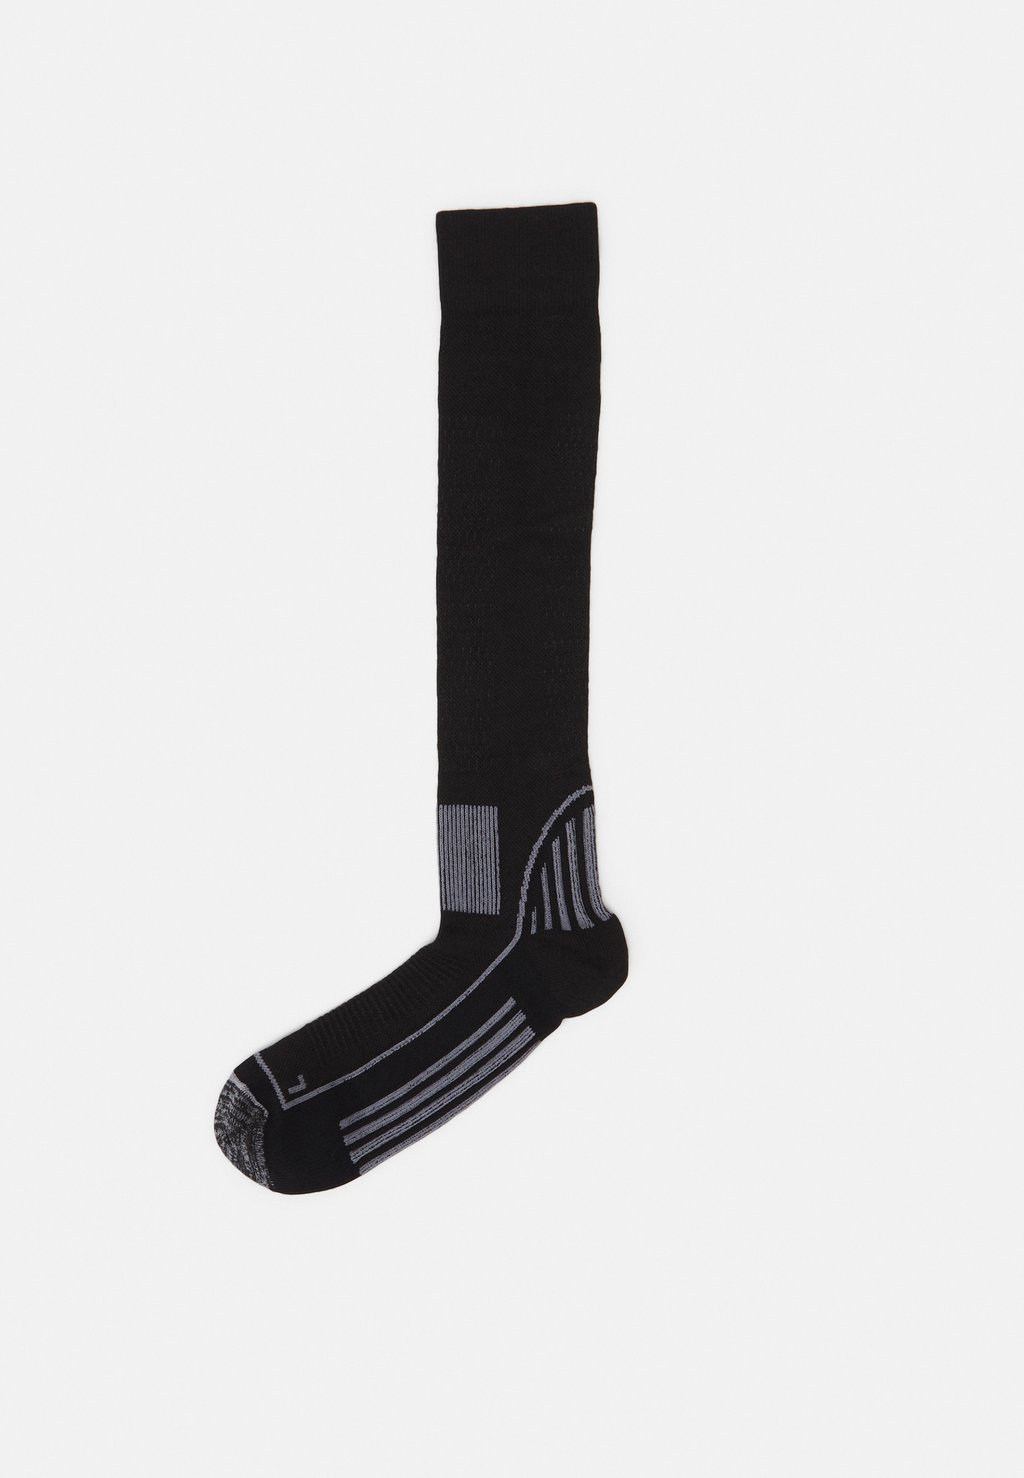 спортивные носки ski sock unisex peak performance цвет black grey melange Спортивные носки Ski Sock Unisex Peak Performance, цвет black/grey melange